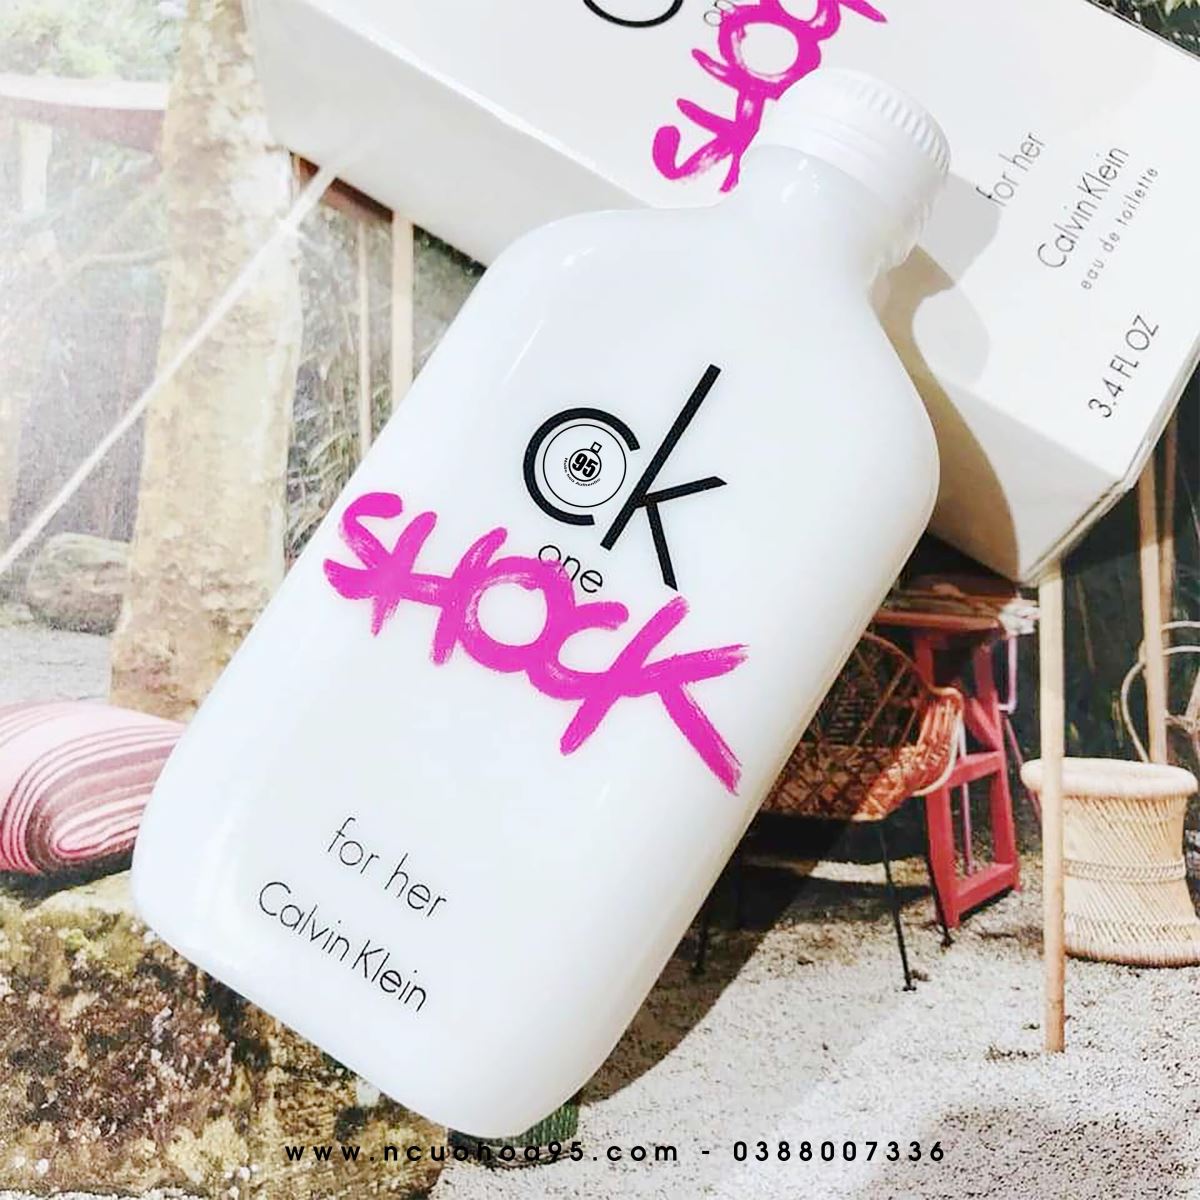 Nước hoa CK One Shock for her của hãng Calvin Klein